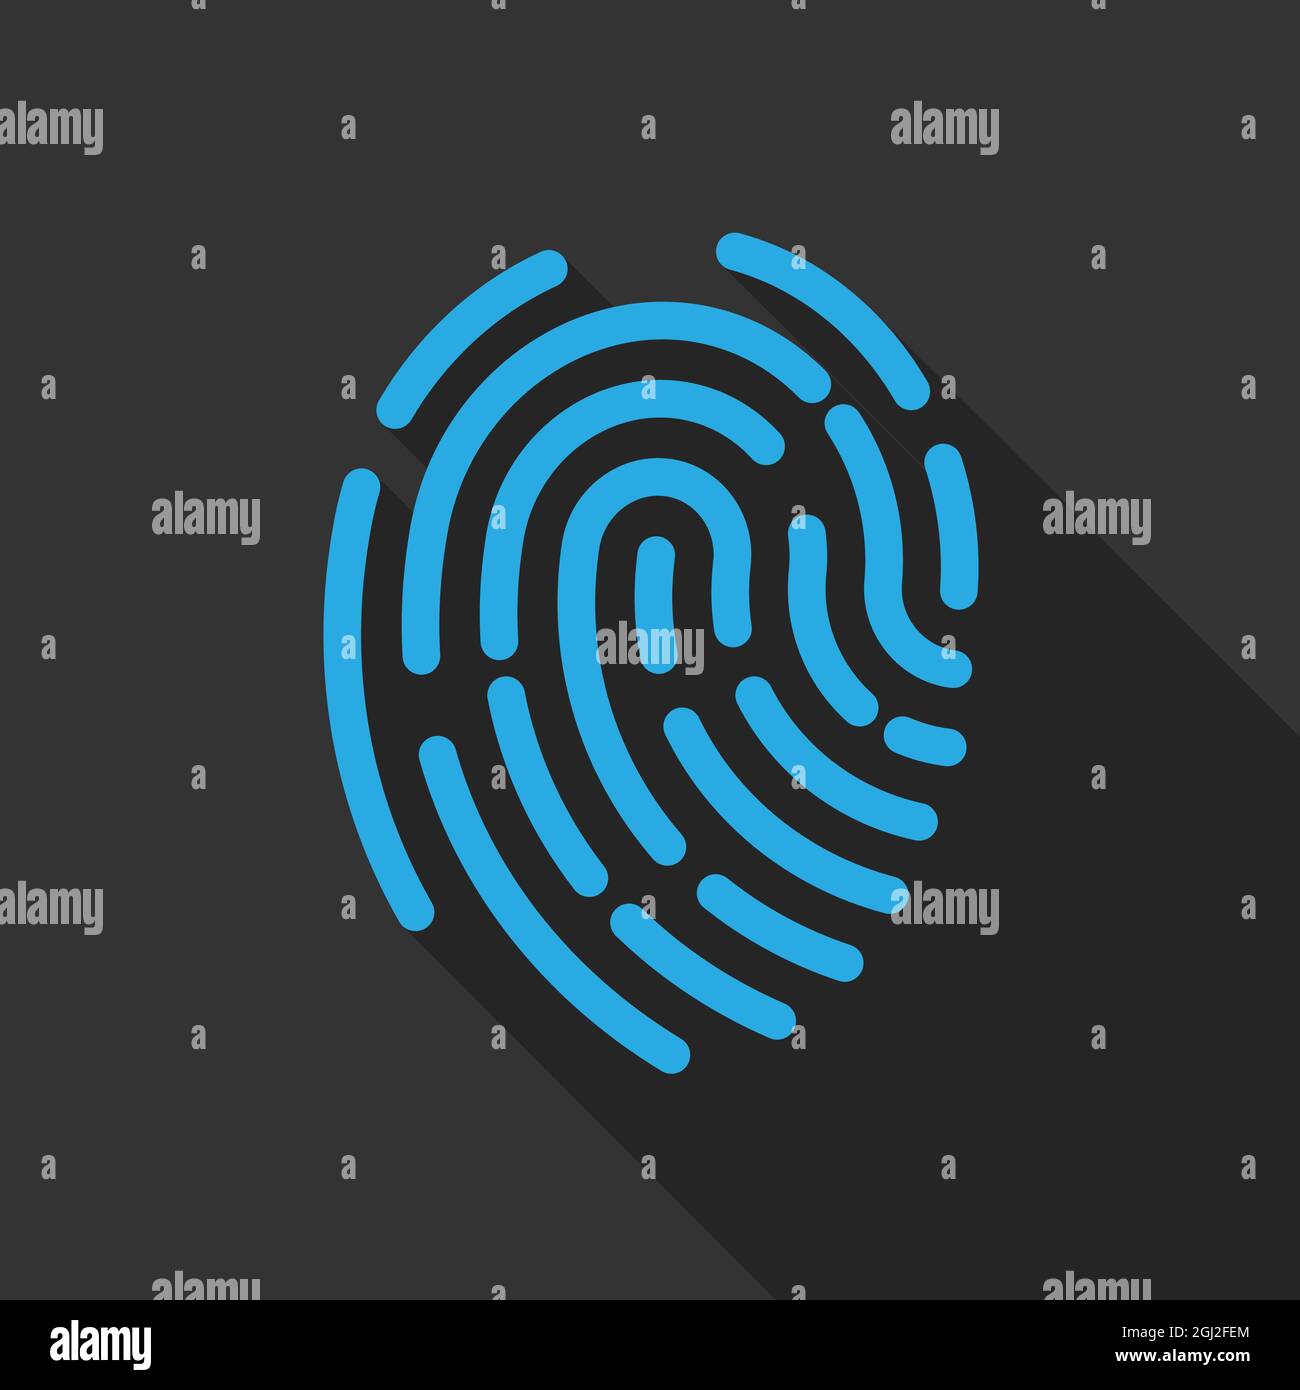 abstract fingerprint symbol or icon, vector illustration Stock Vector